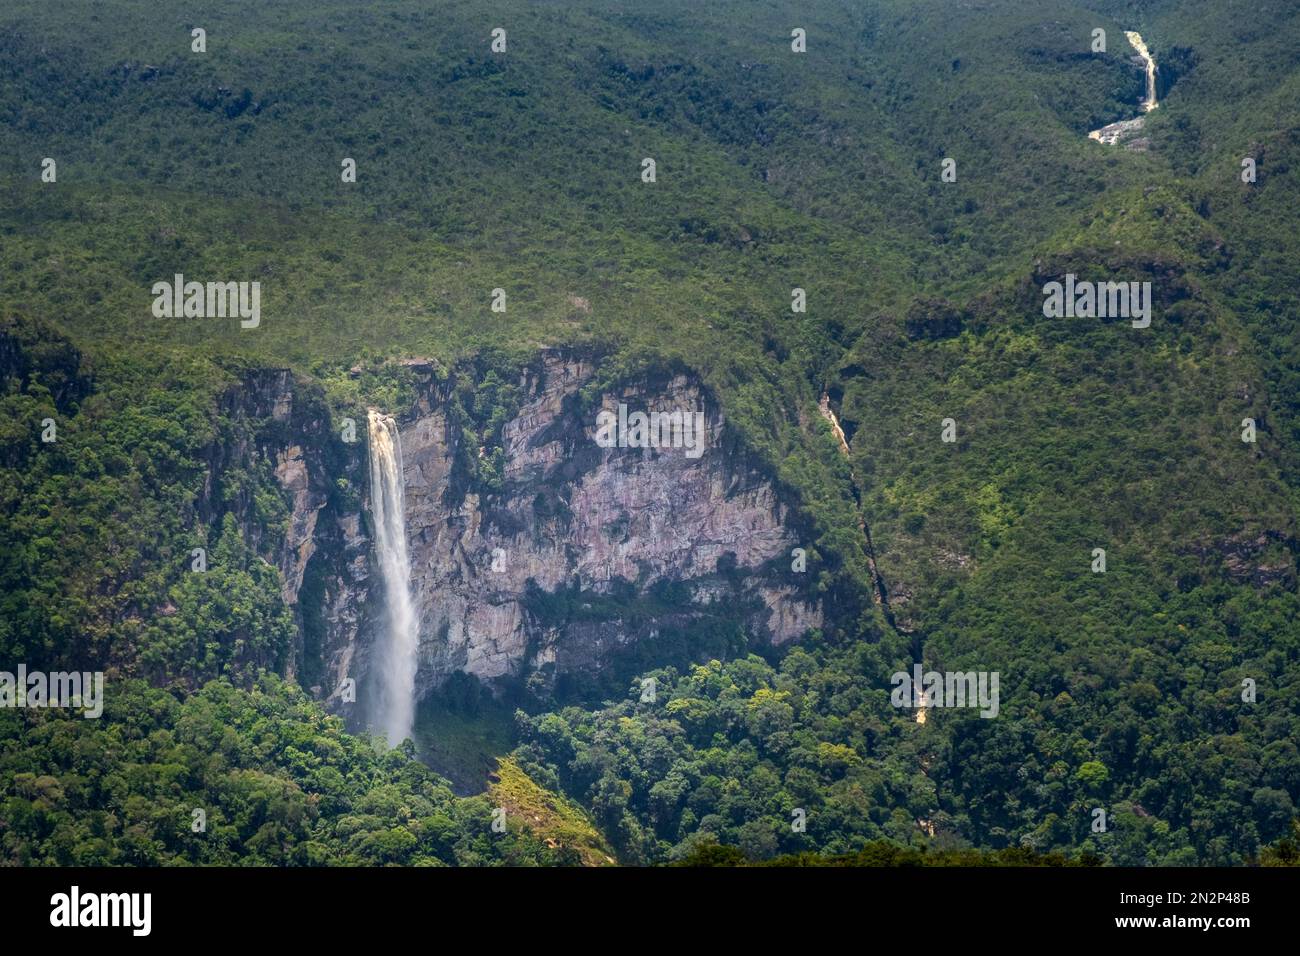 A waterfall on Araca mountain, a tepui in the remote Serra do Araca State Park, Guiana Shield, Amazonas, Brazil Stock Photo